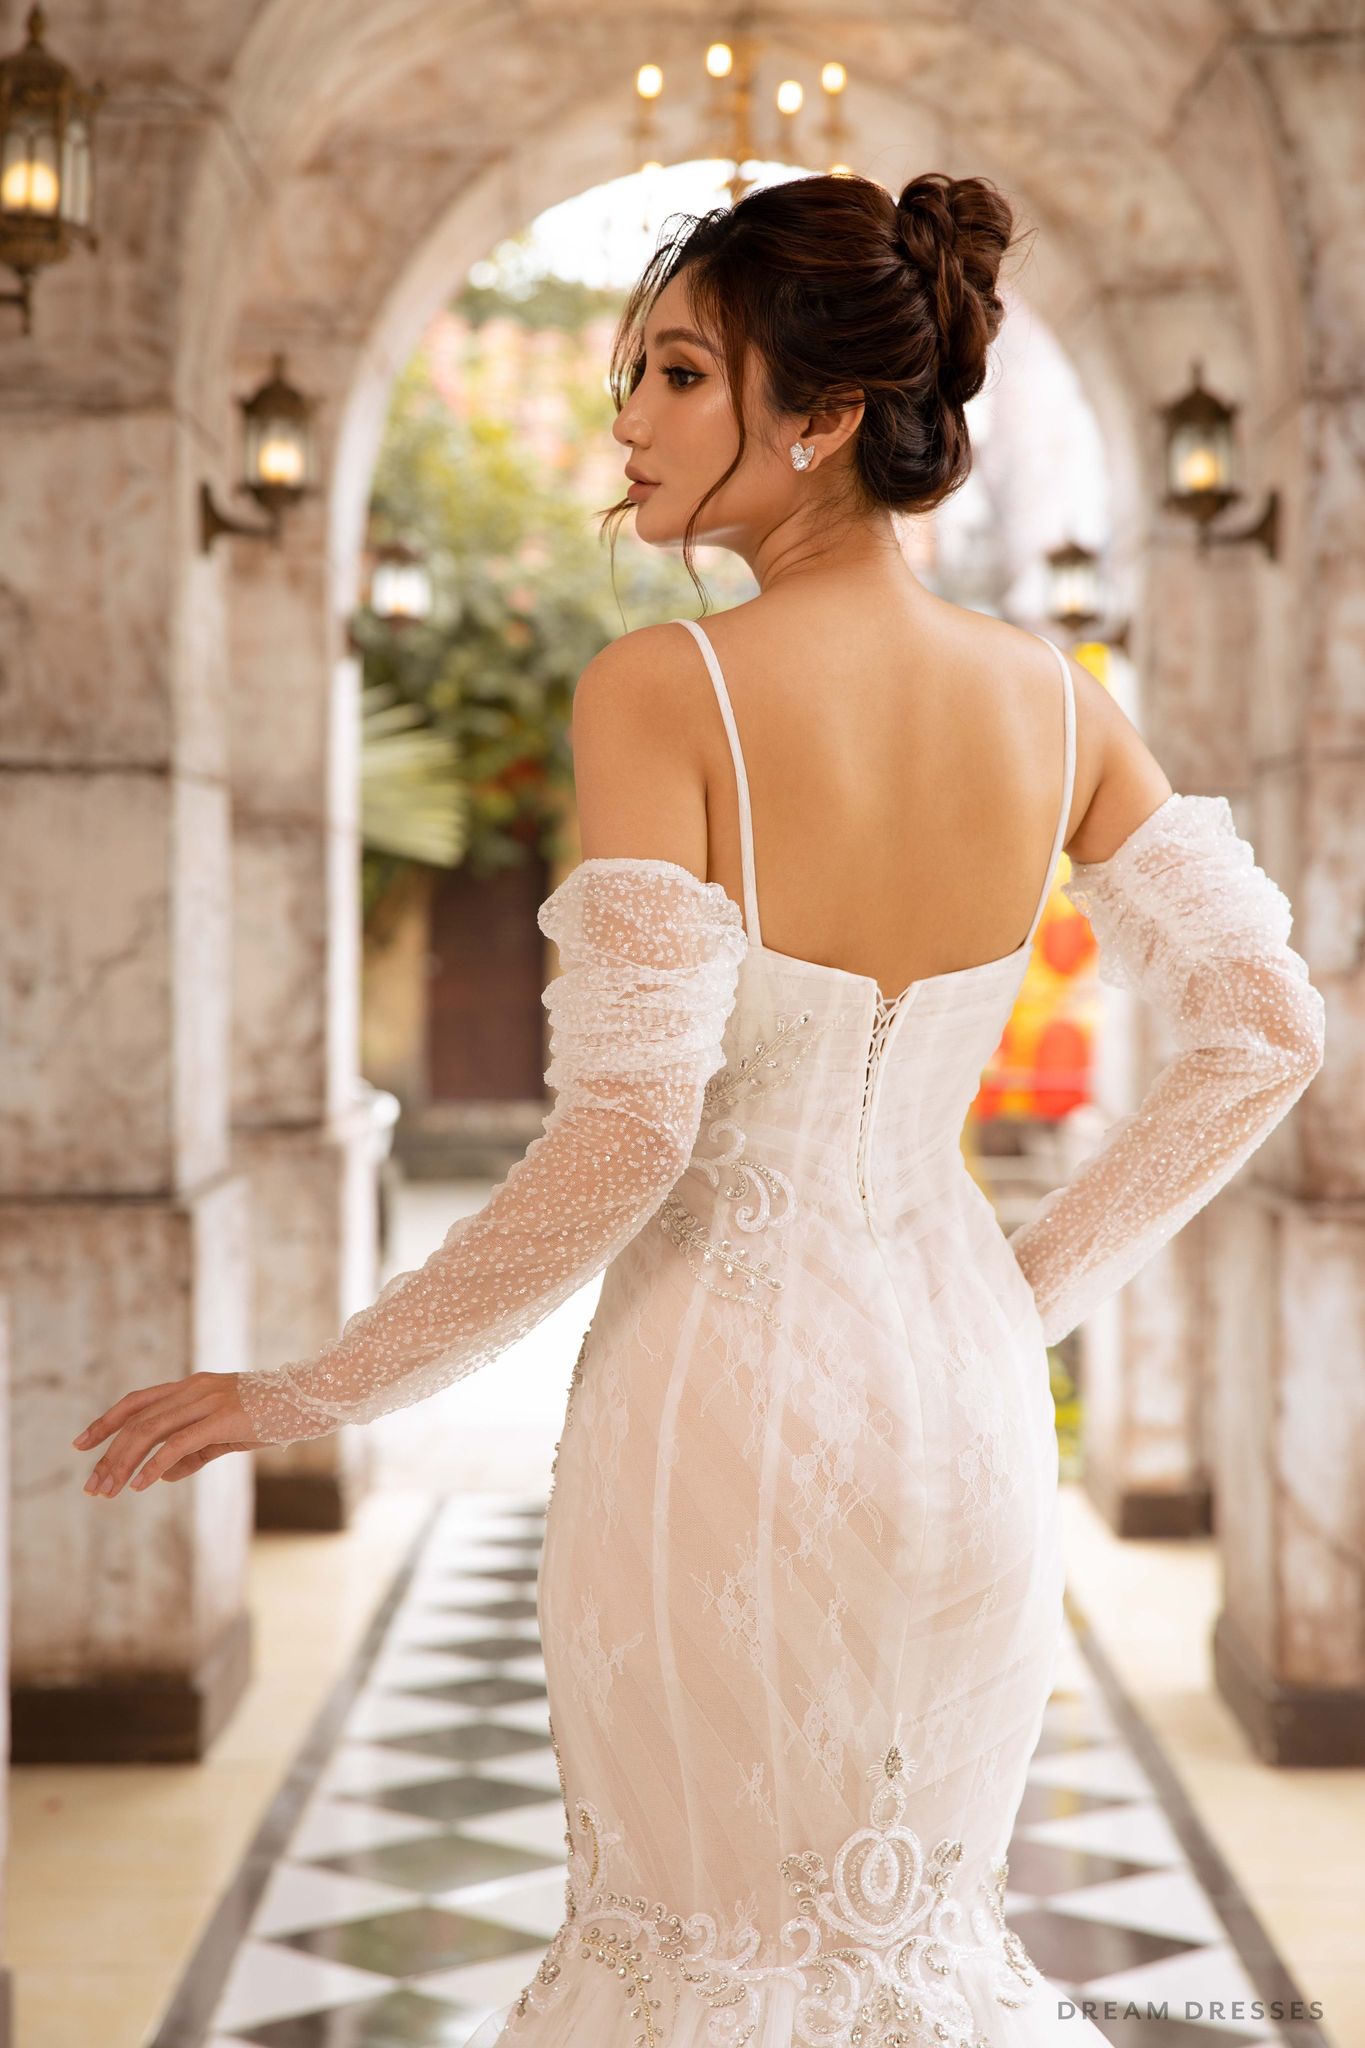 Attachable Glittery Sleeves for Wedding Dress (#SELENA)